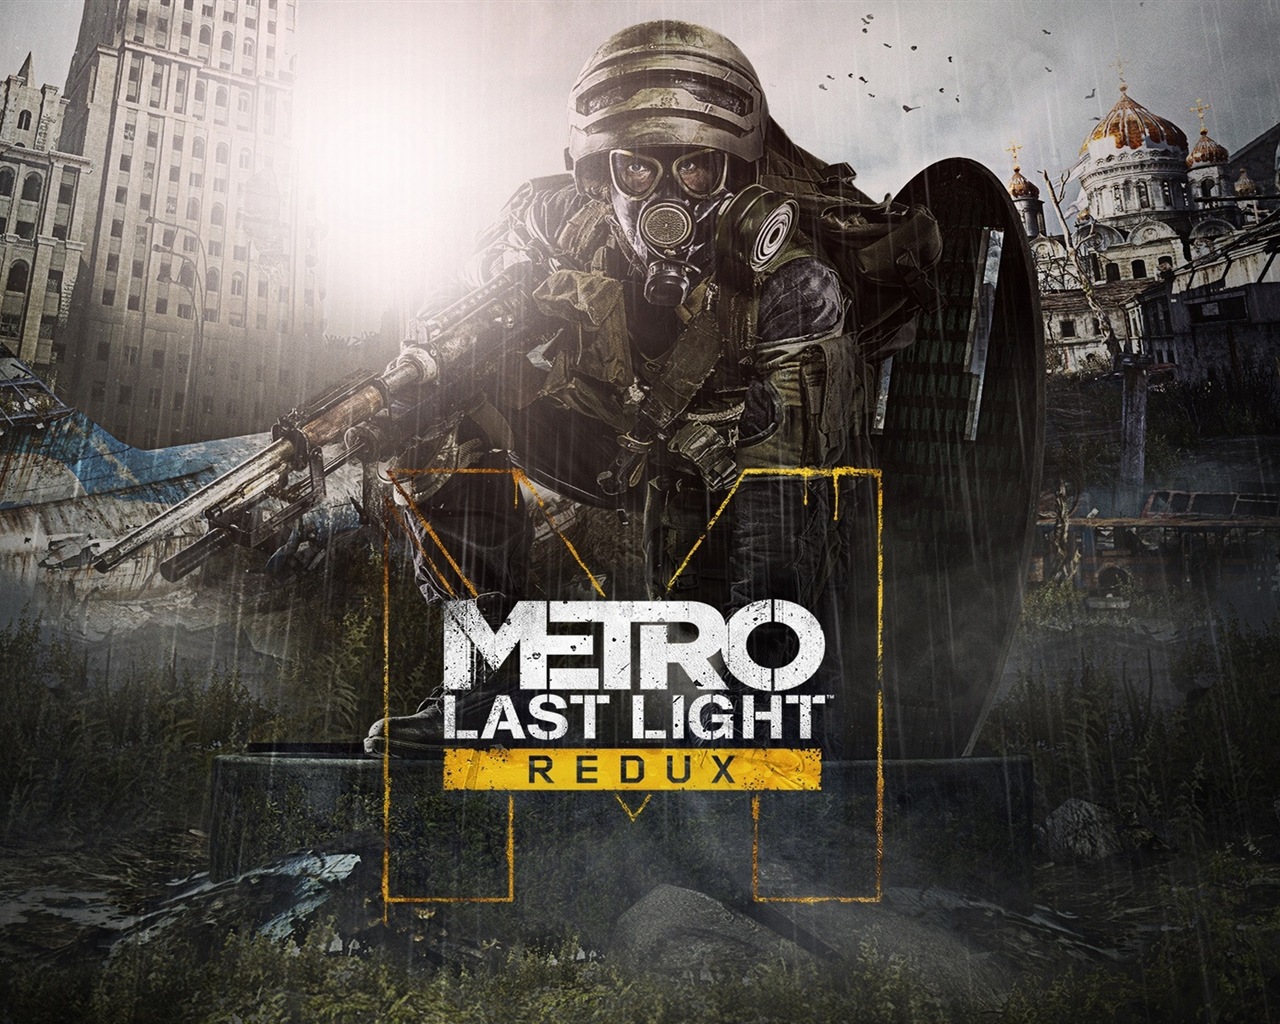 Metro 2033 Redux 地铁2033终极版 游戏壁纸10 - 1280x1024